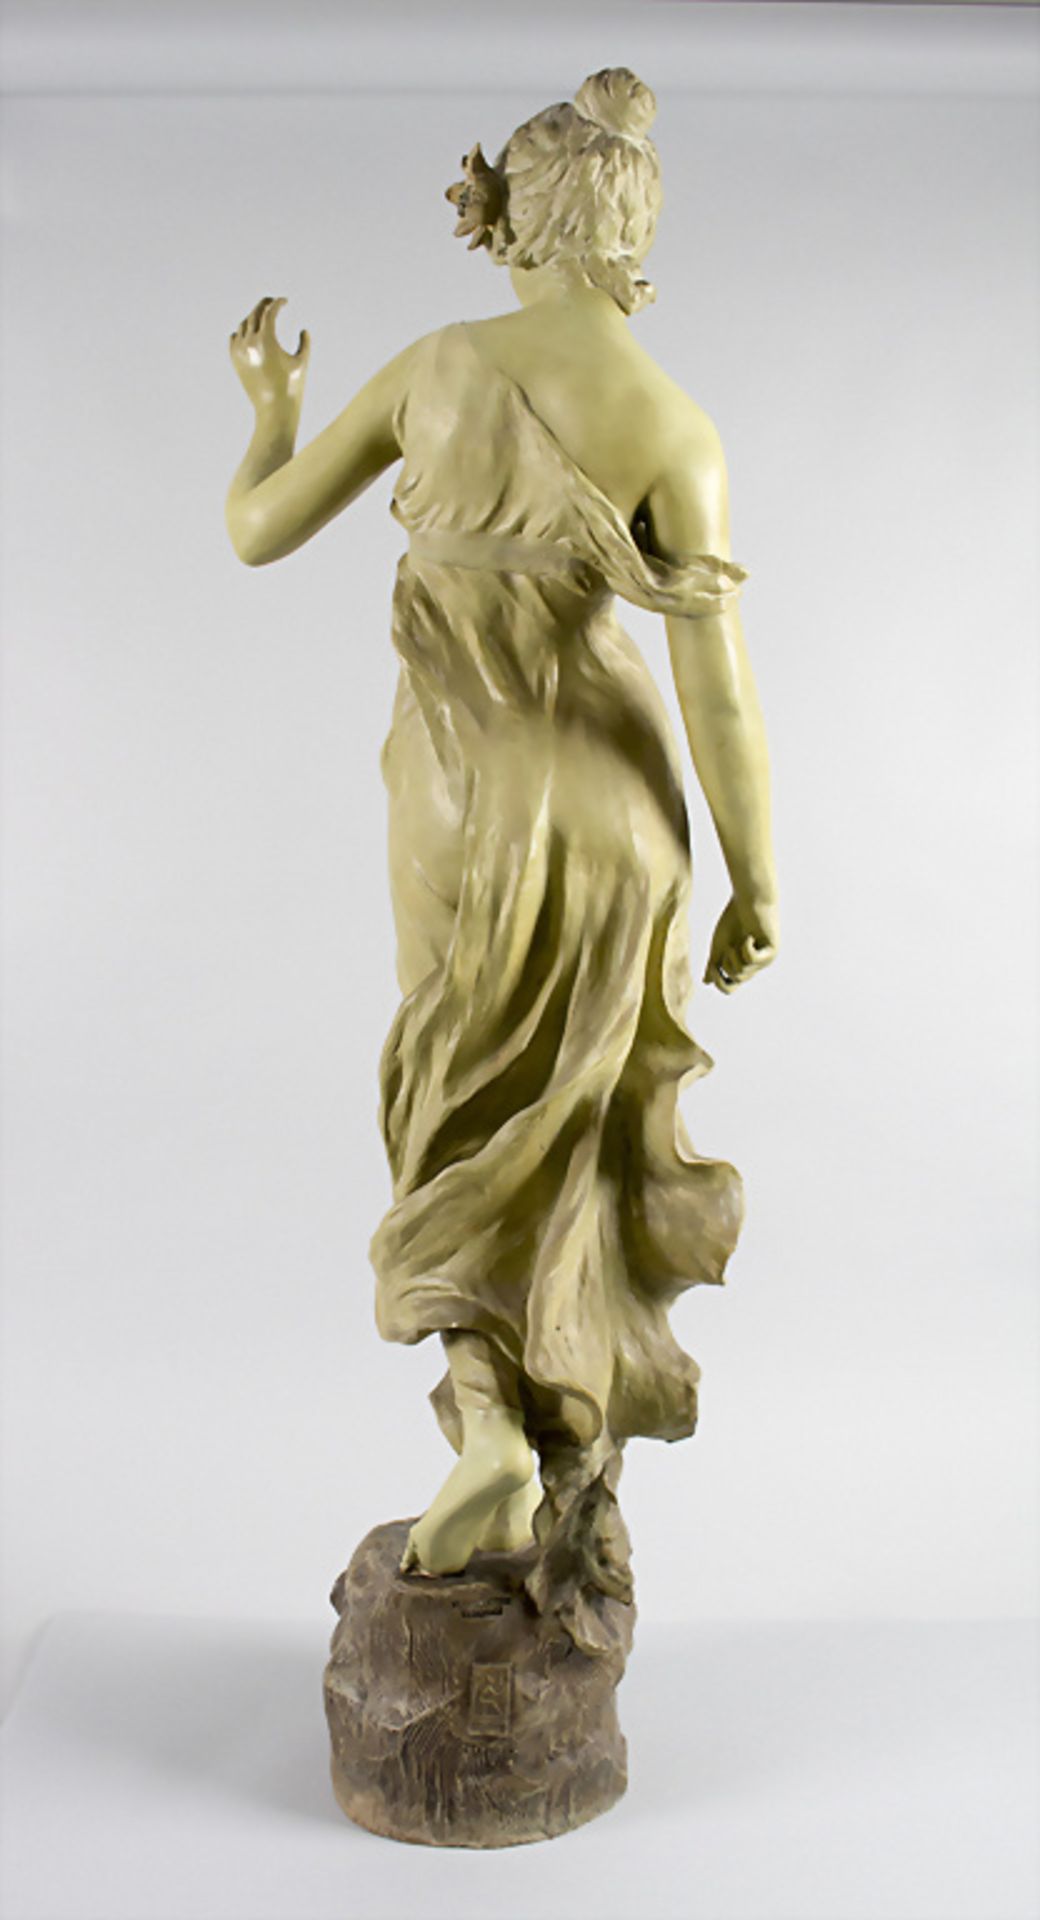 Jugendstil-Skulptur 'Tänzerin' / An Art Nouveau sculpture 'Dancer', Goldscheider, Wien, um 1900 - Image 3 of 9